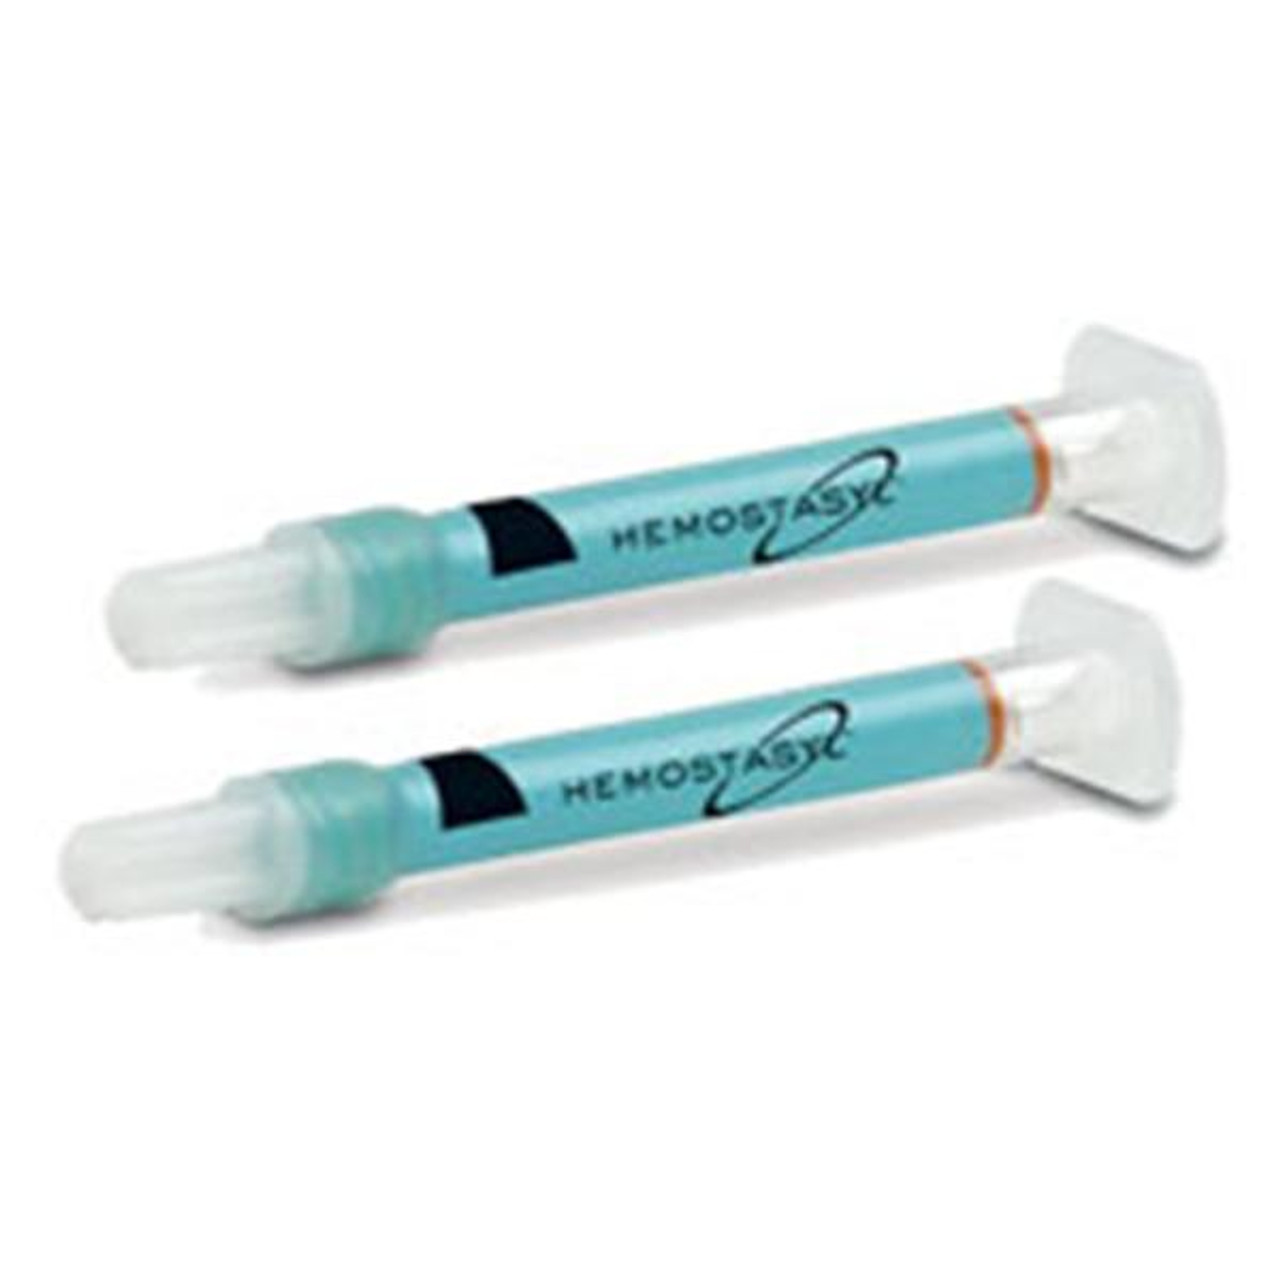 Acteon North America - Hemostasyl Syringe